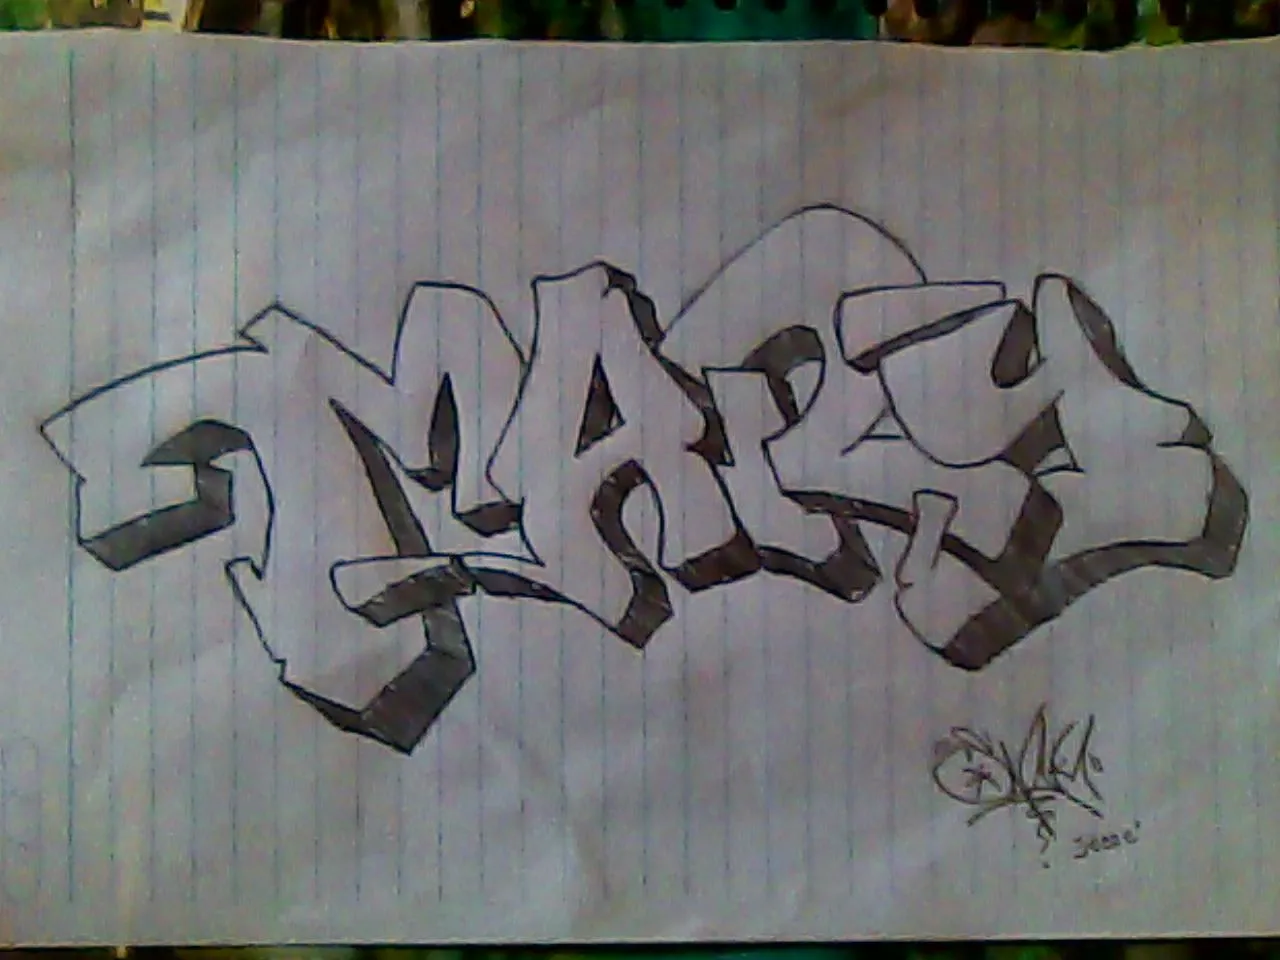 Sr. Kans : "Graffiti pra turma - Mary - DMC 306"